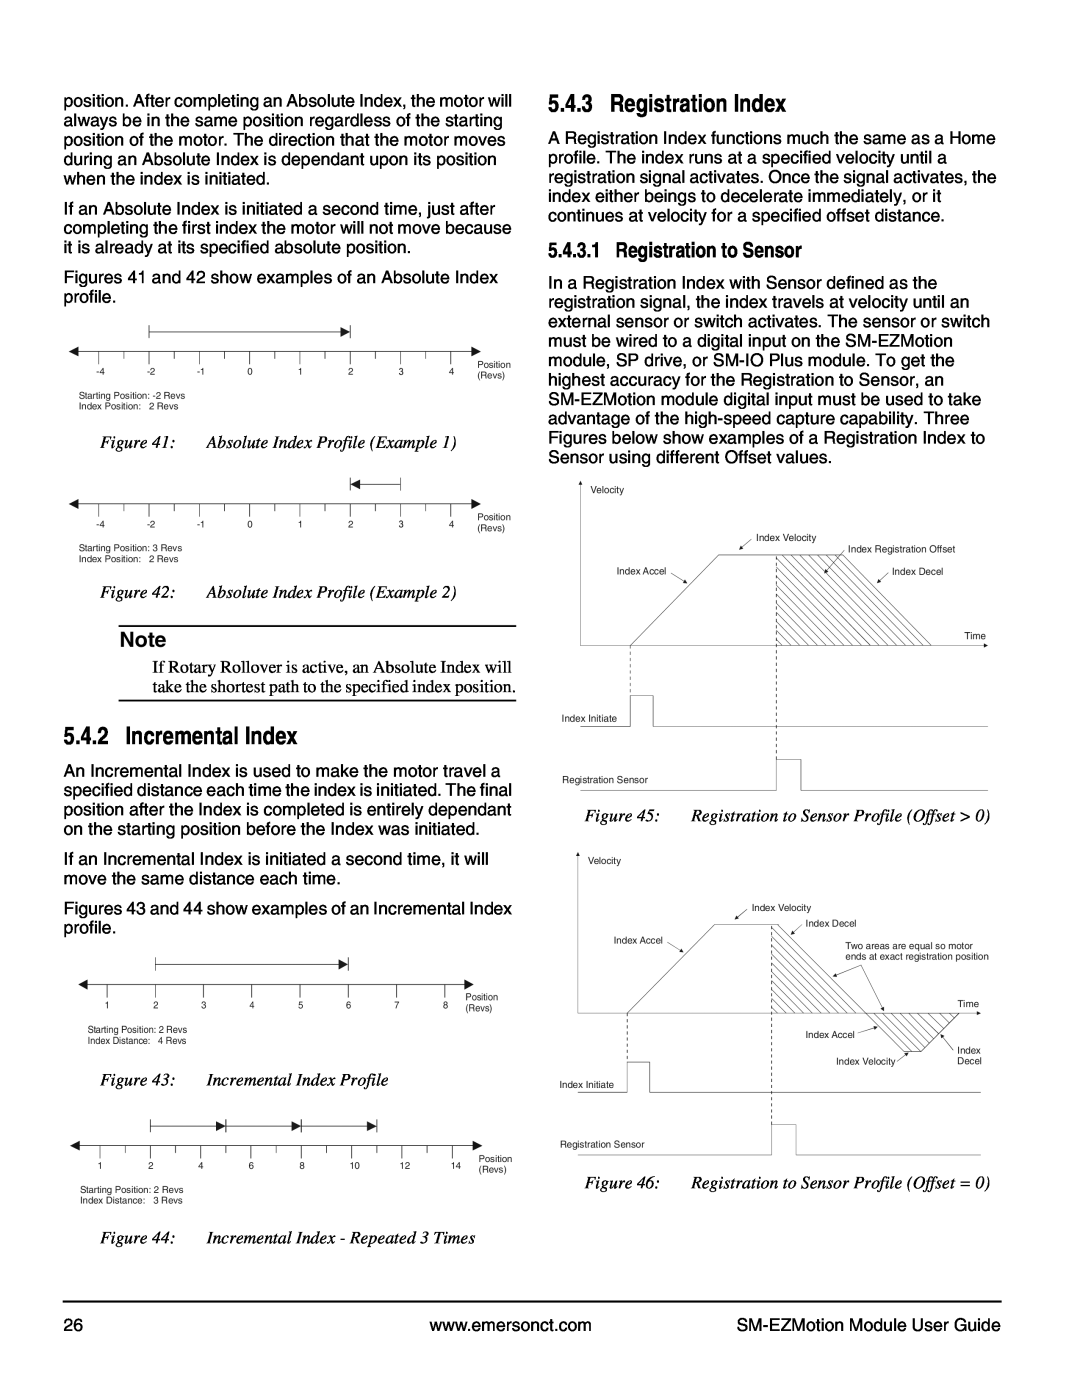 Emerson P/N 400361-00 manual Incremental Index, Registration Index, Registration to Sensor, Absolute Index Profile Example 